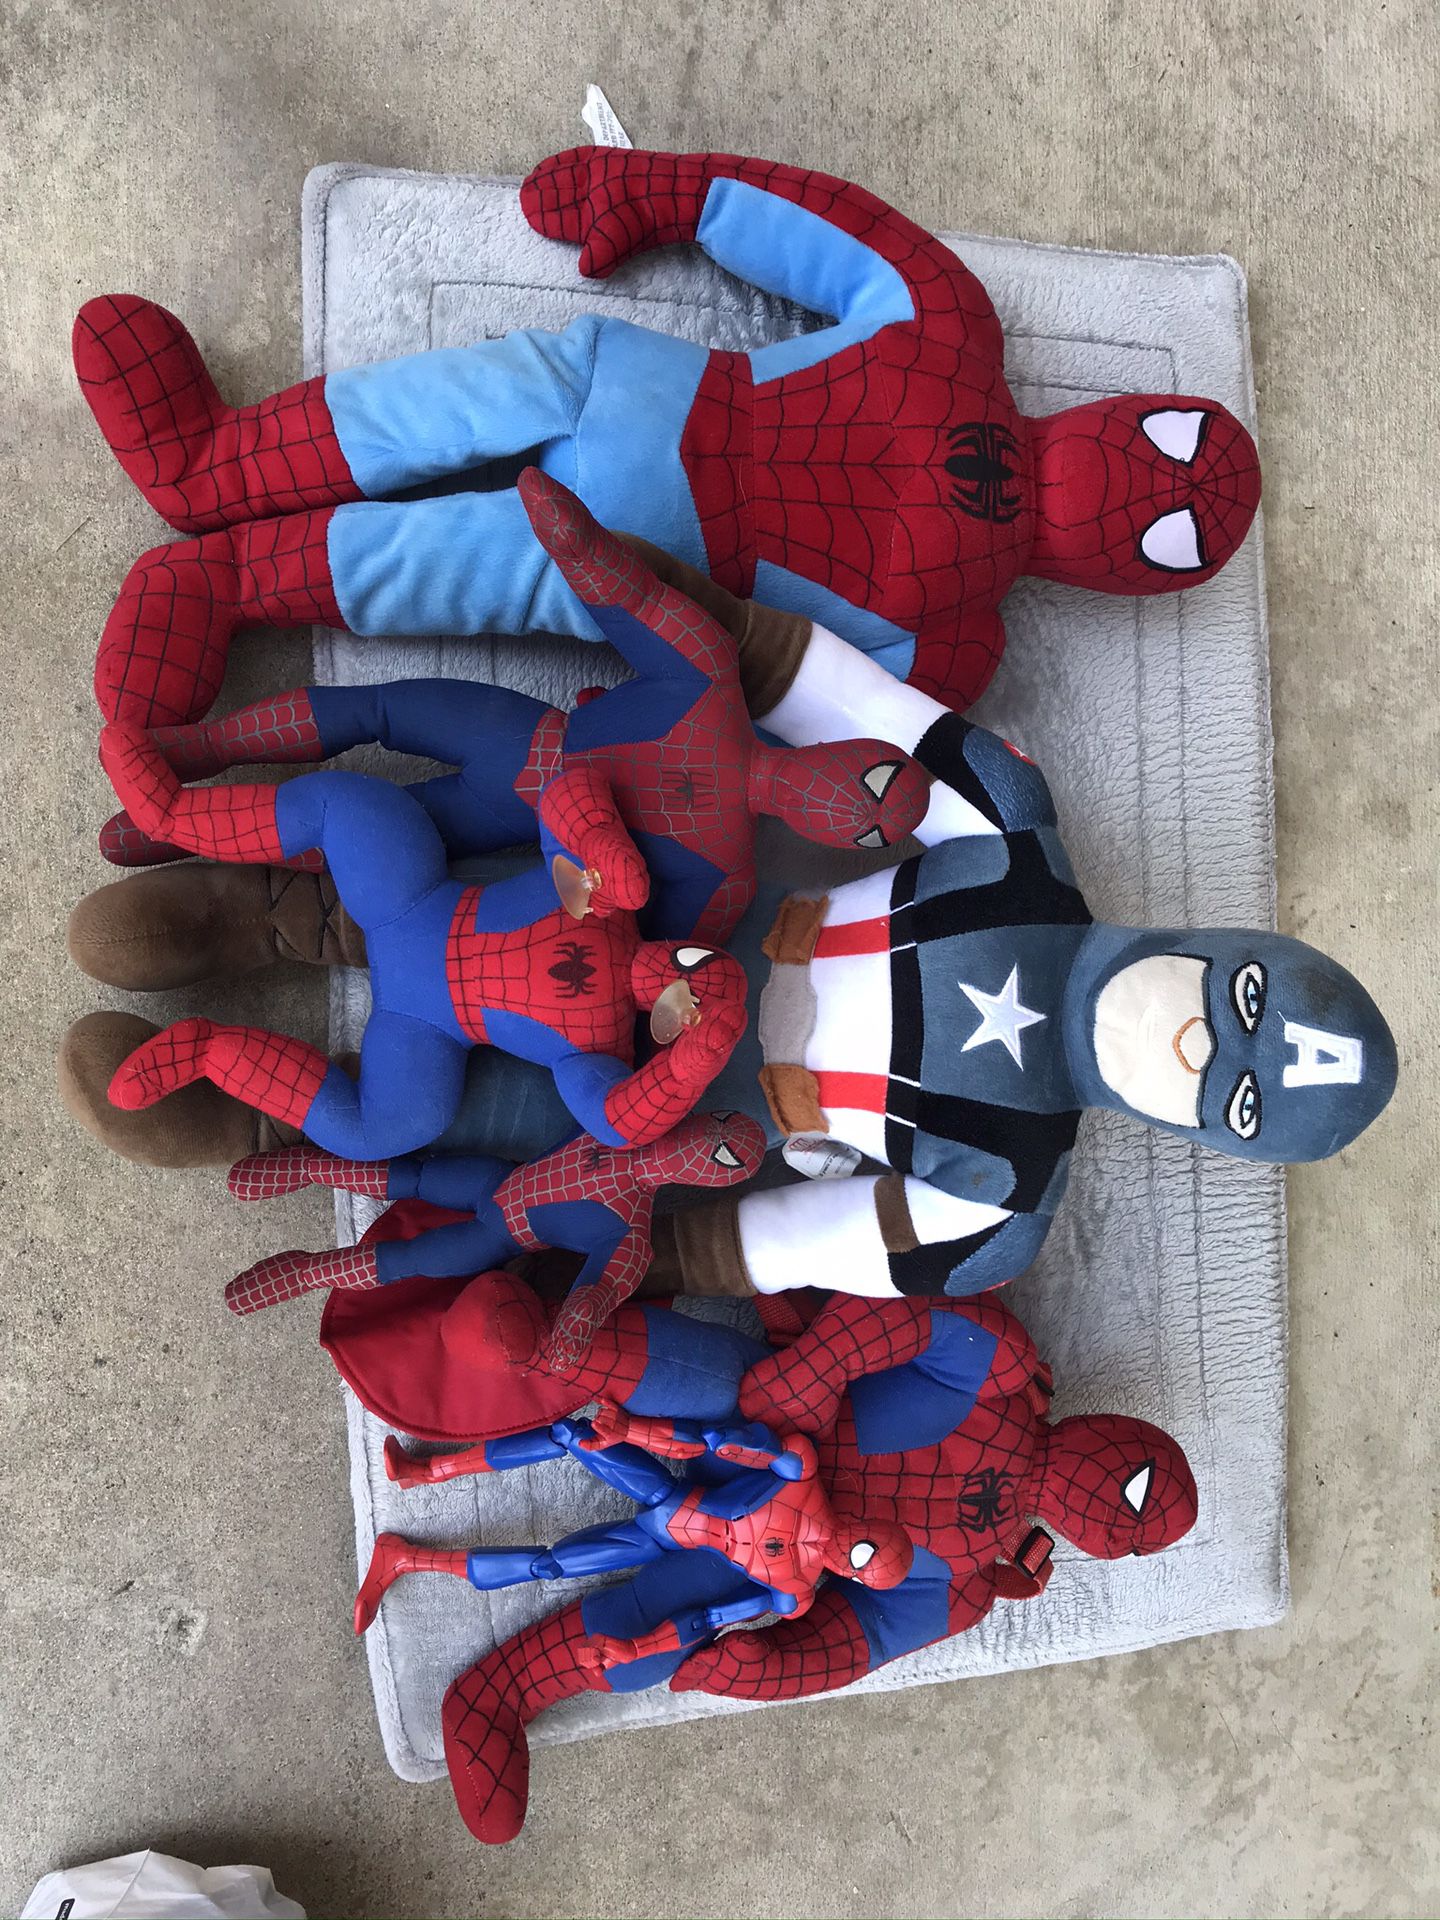 Plush marvel Spider-Man and captain America